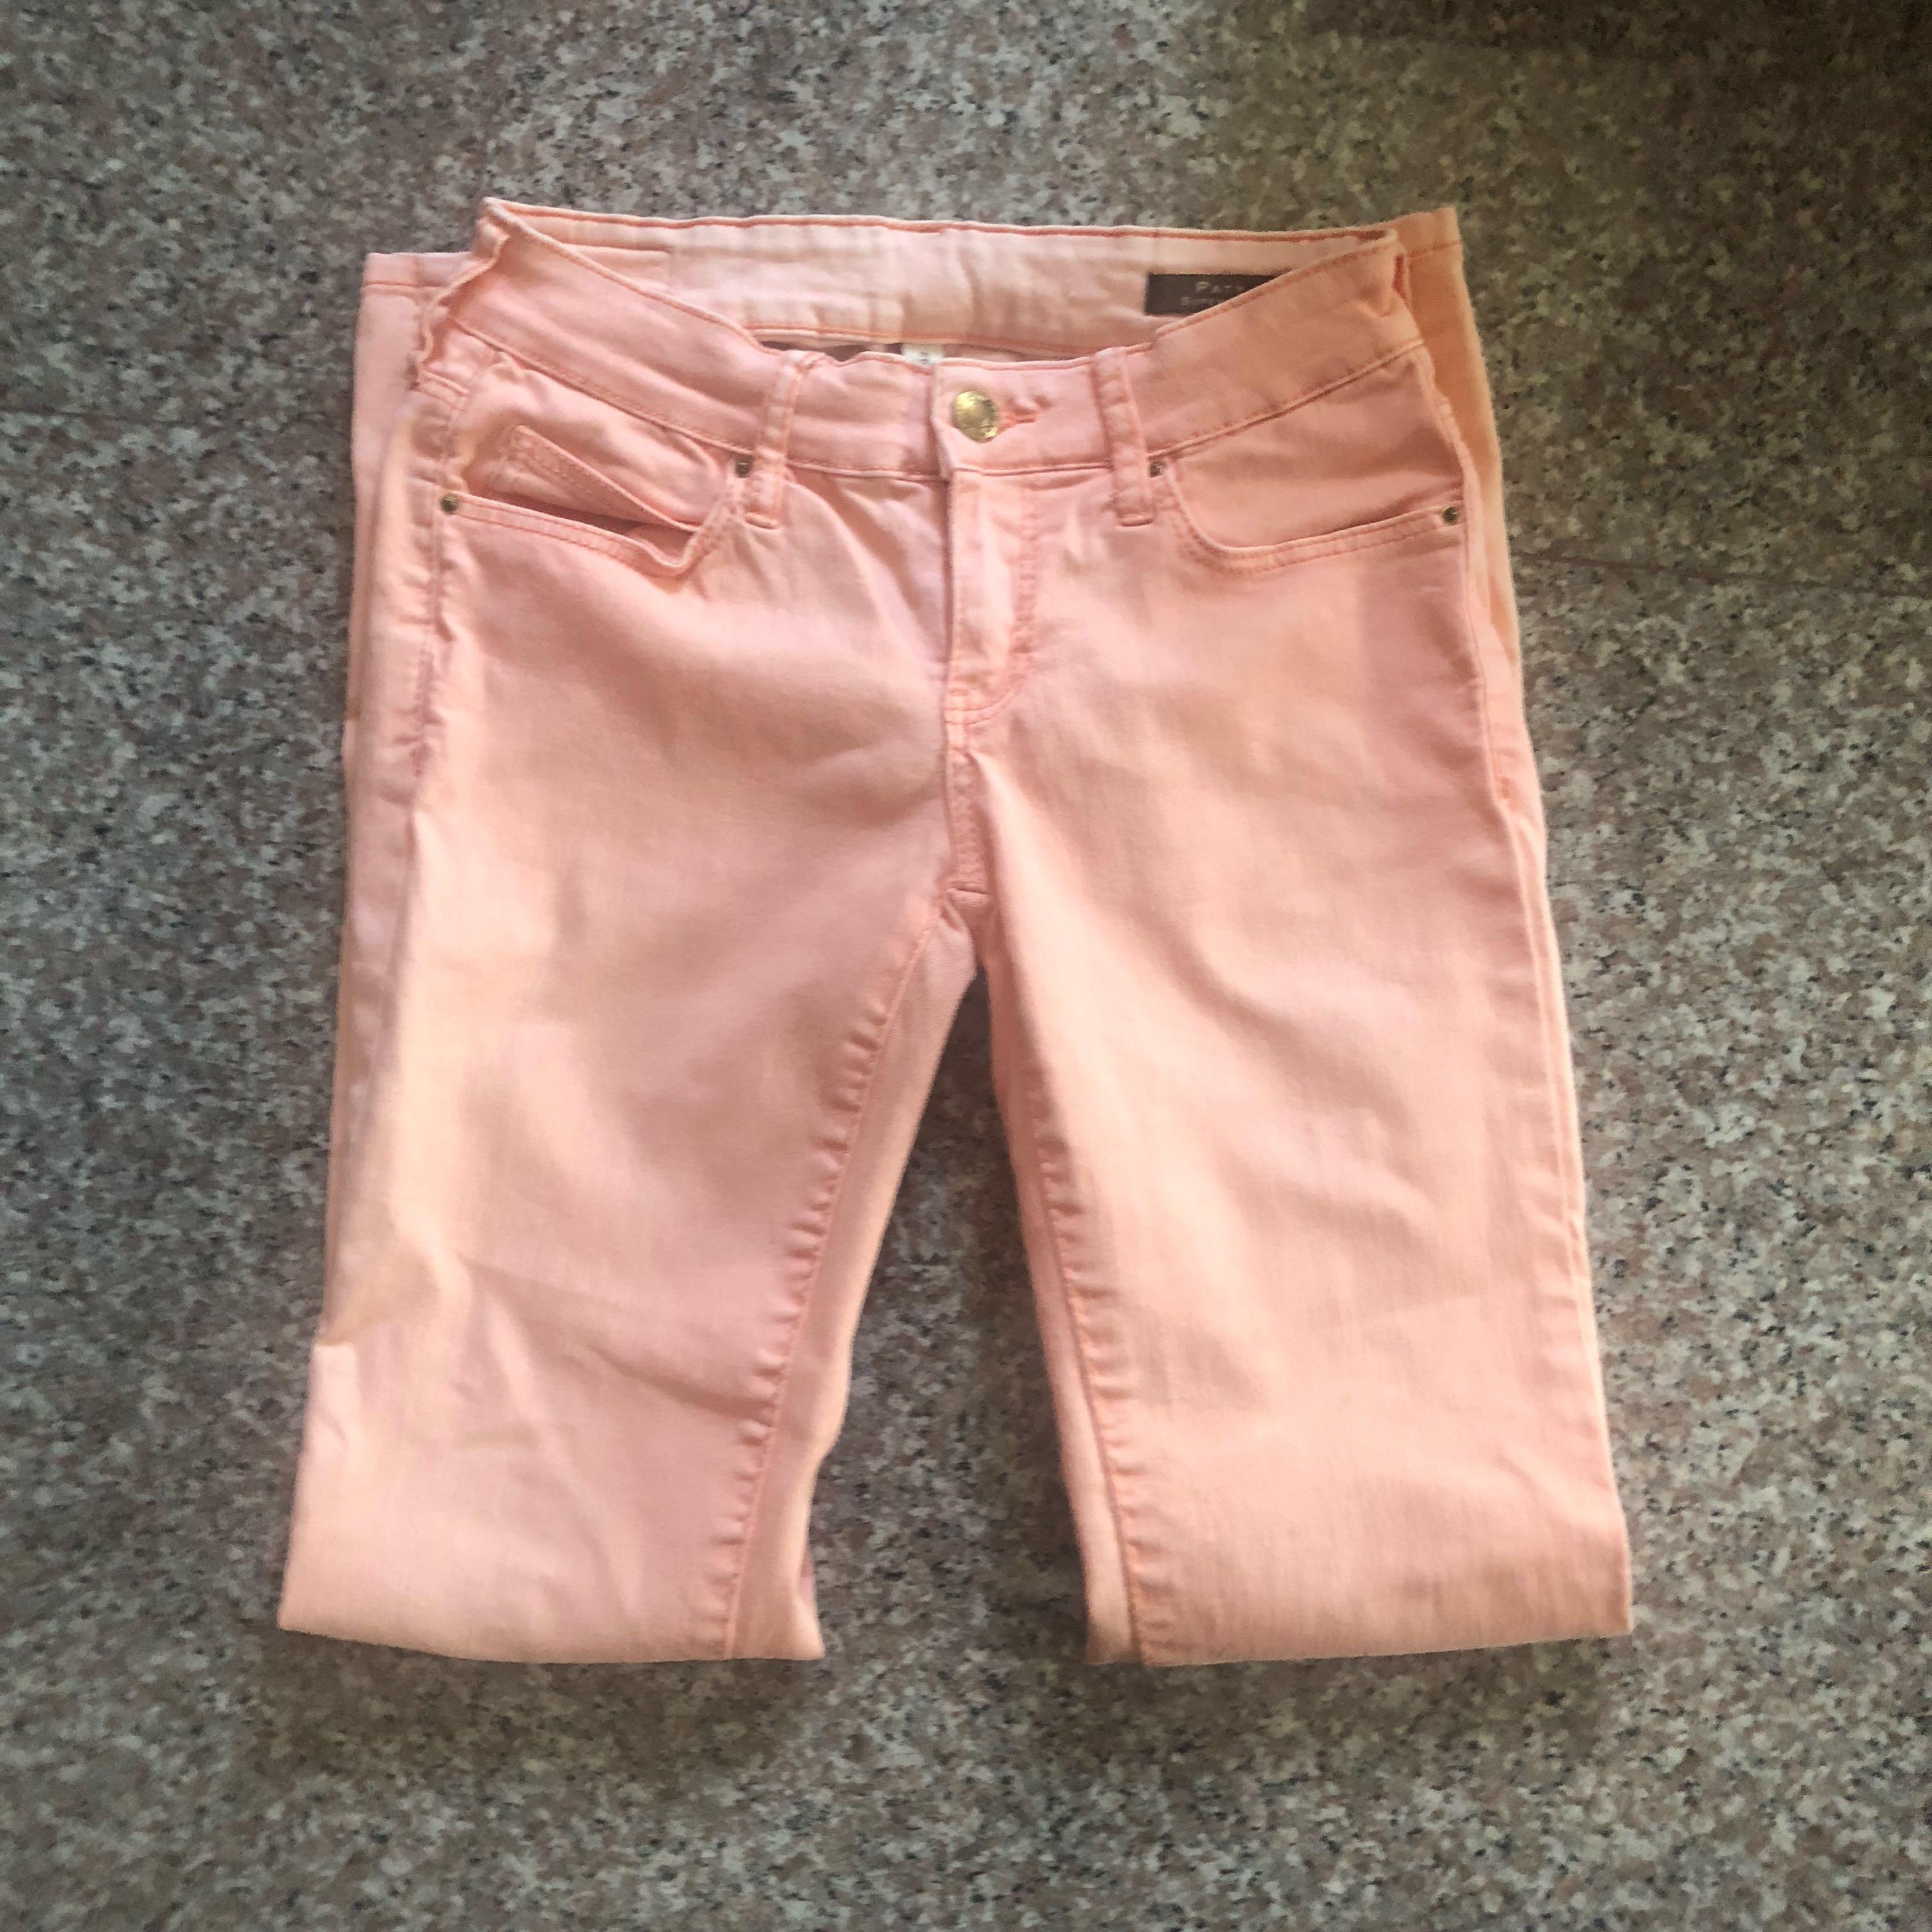 Pastel pink skinny jeans